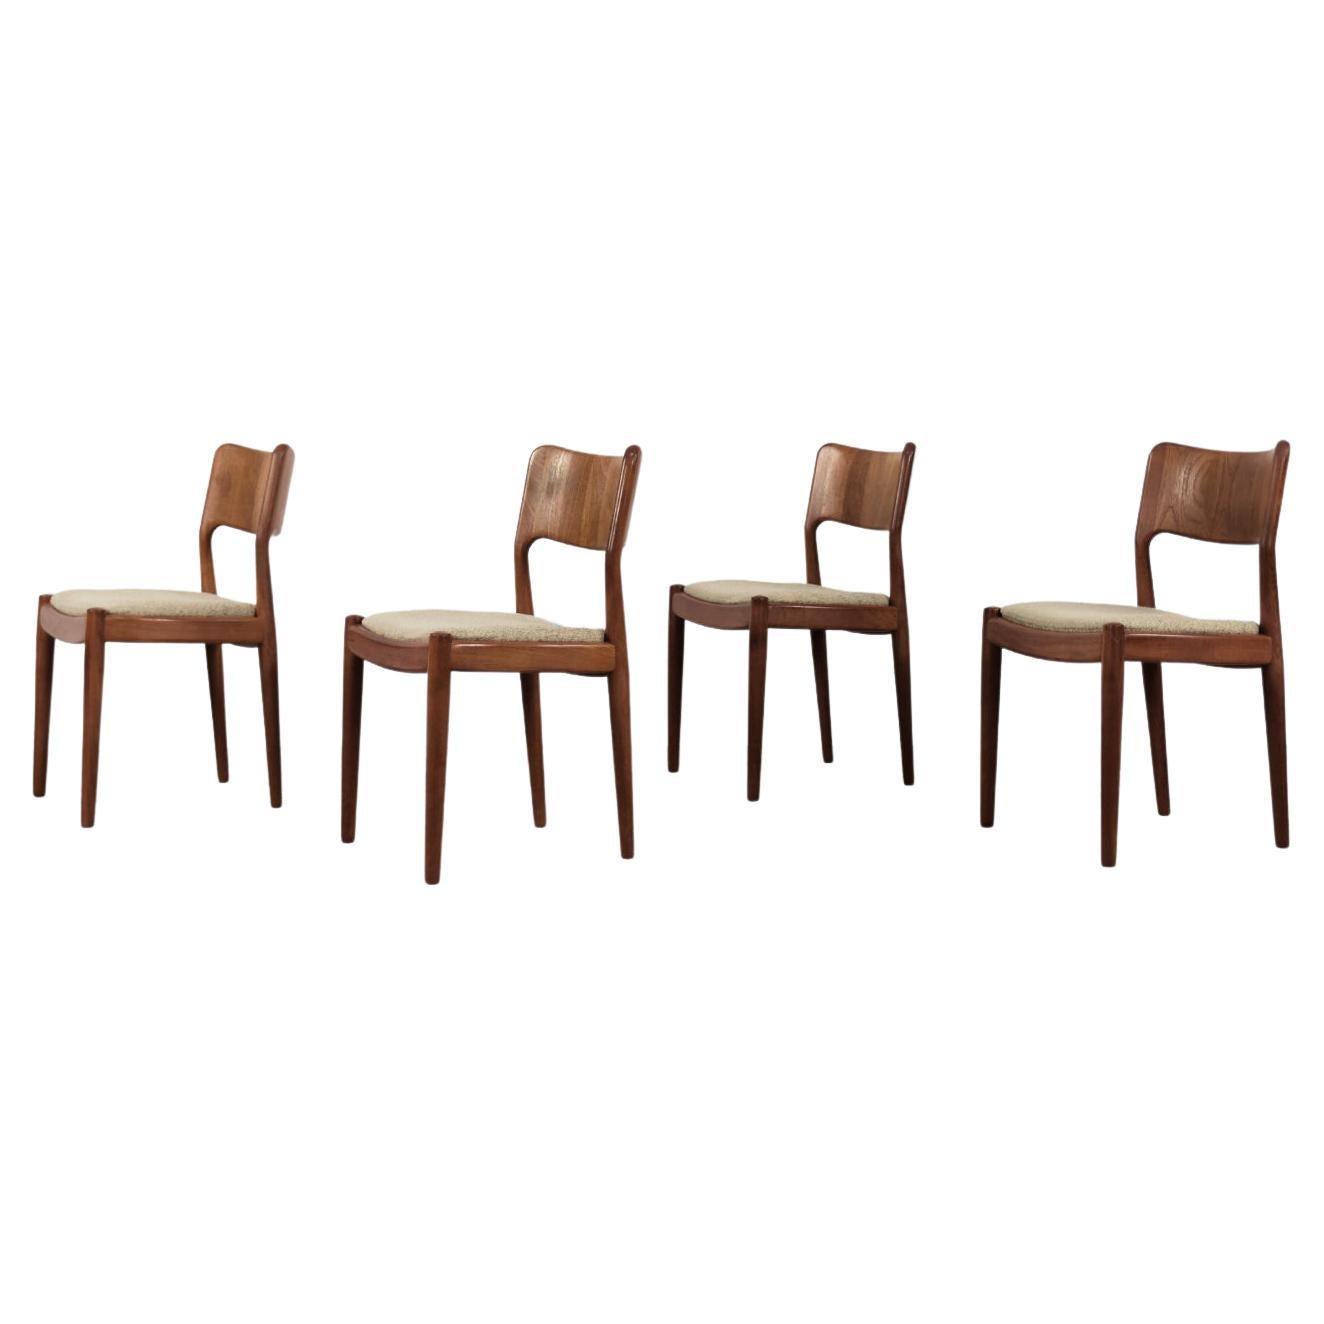 Set of 4 Vintage Scandinavian Midcentury Modern Teak Wood & Fabric Dining Chairs